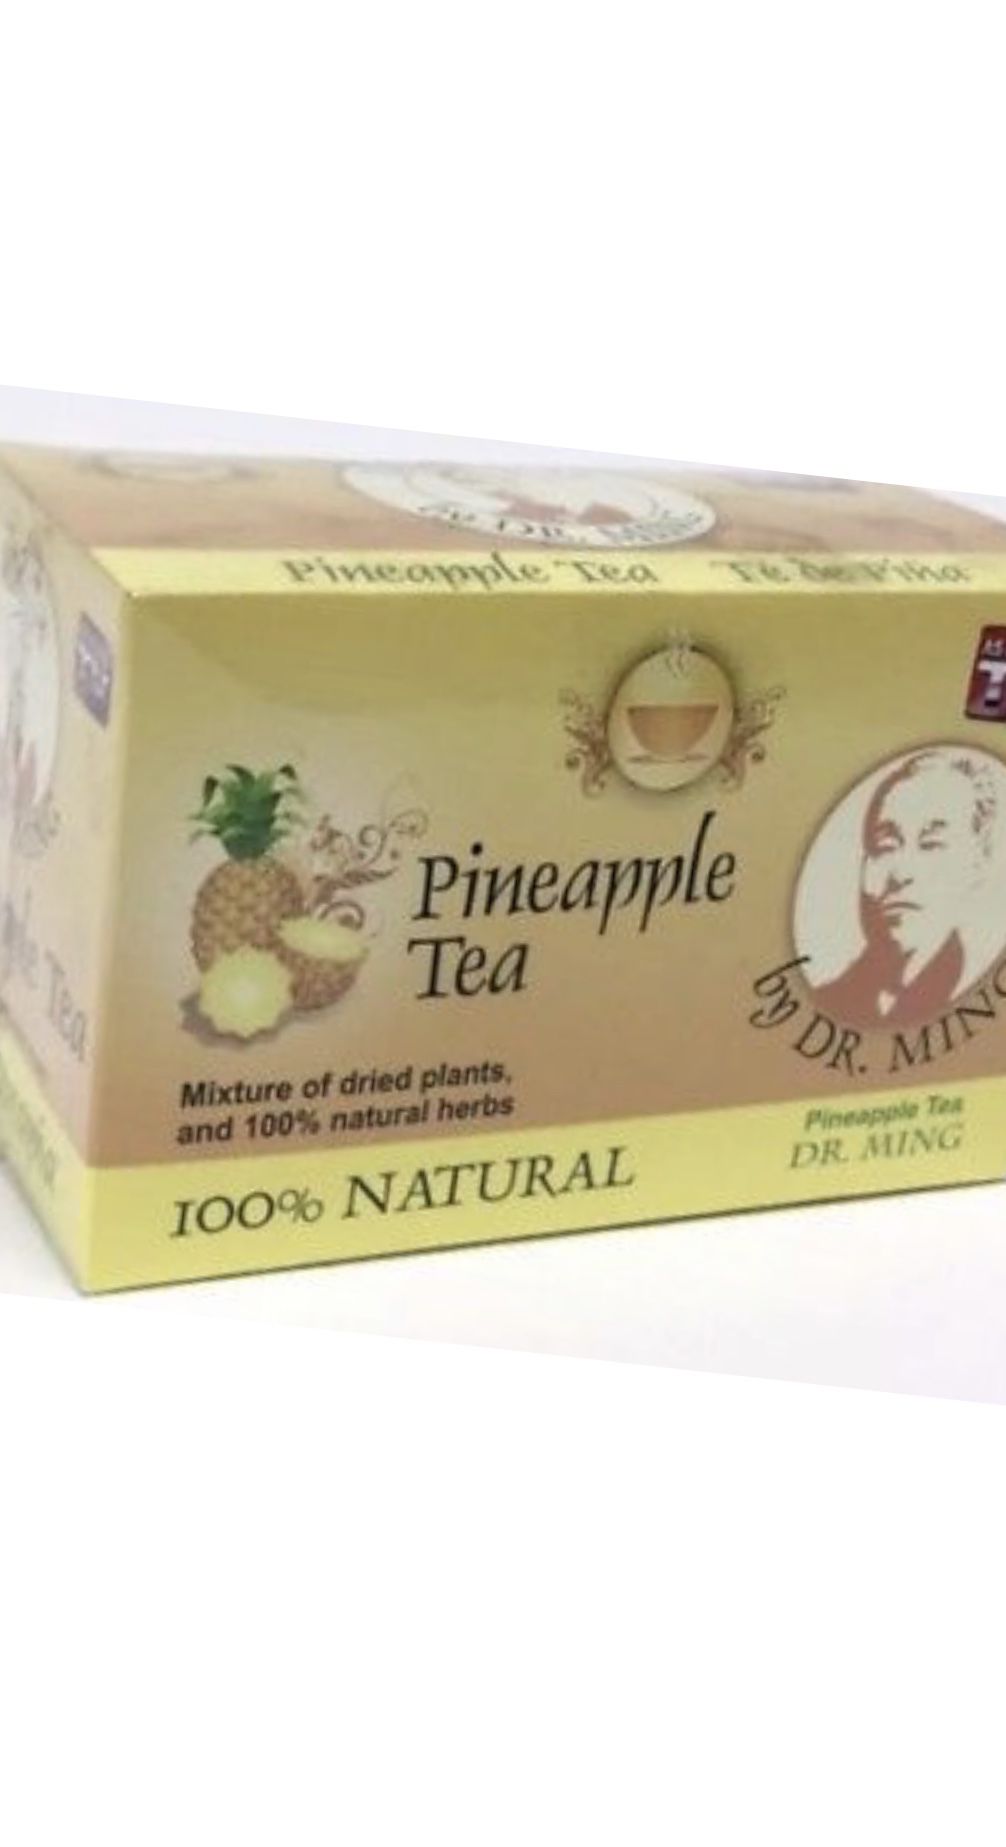 2 Boxes Dr Ming Pineapple Tea 30 Bags Original-te De Pina Pinaterapia Detox  for Sale in Miami, FL - OfferUp